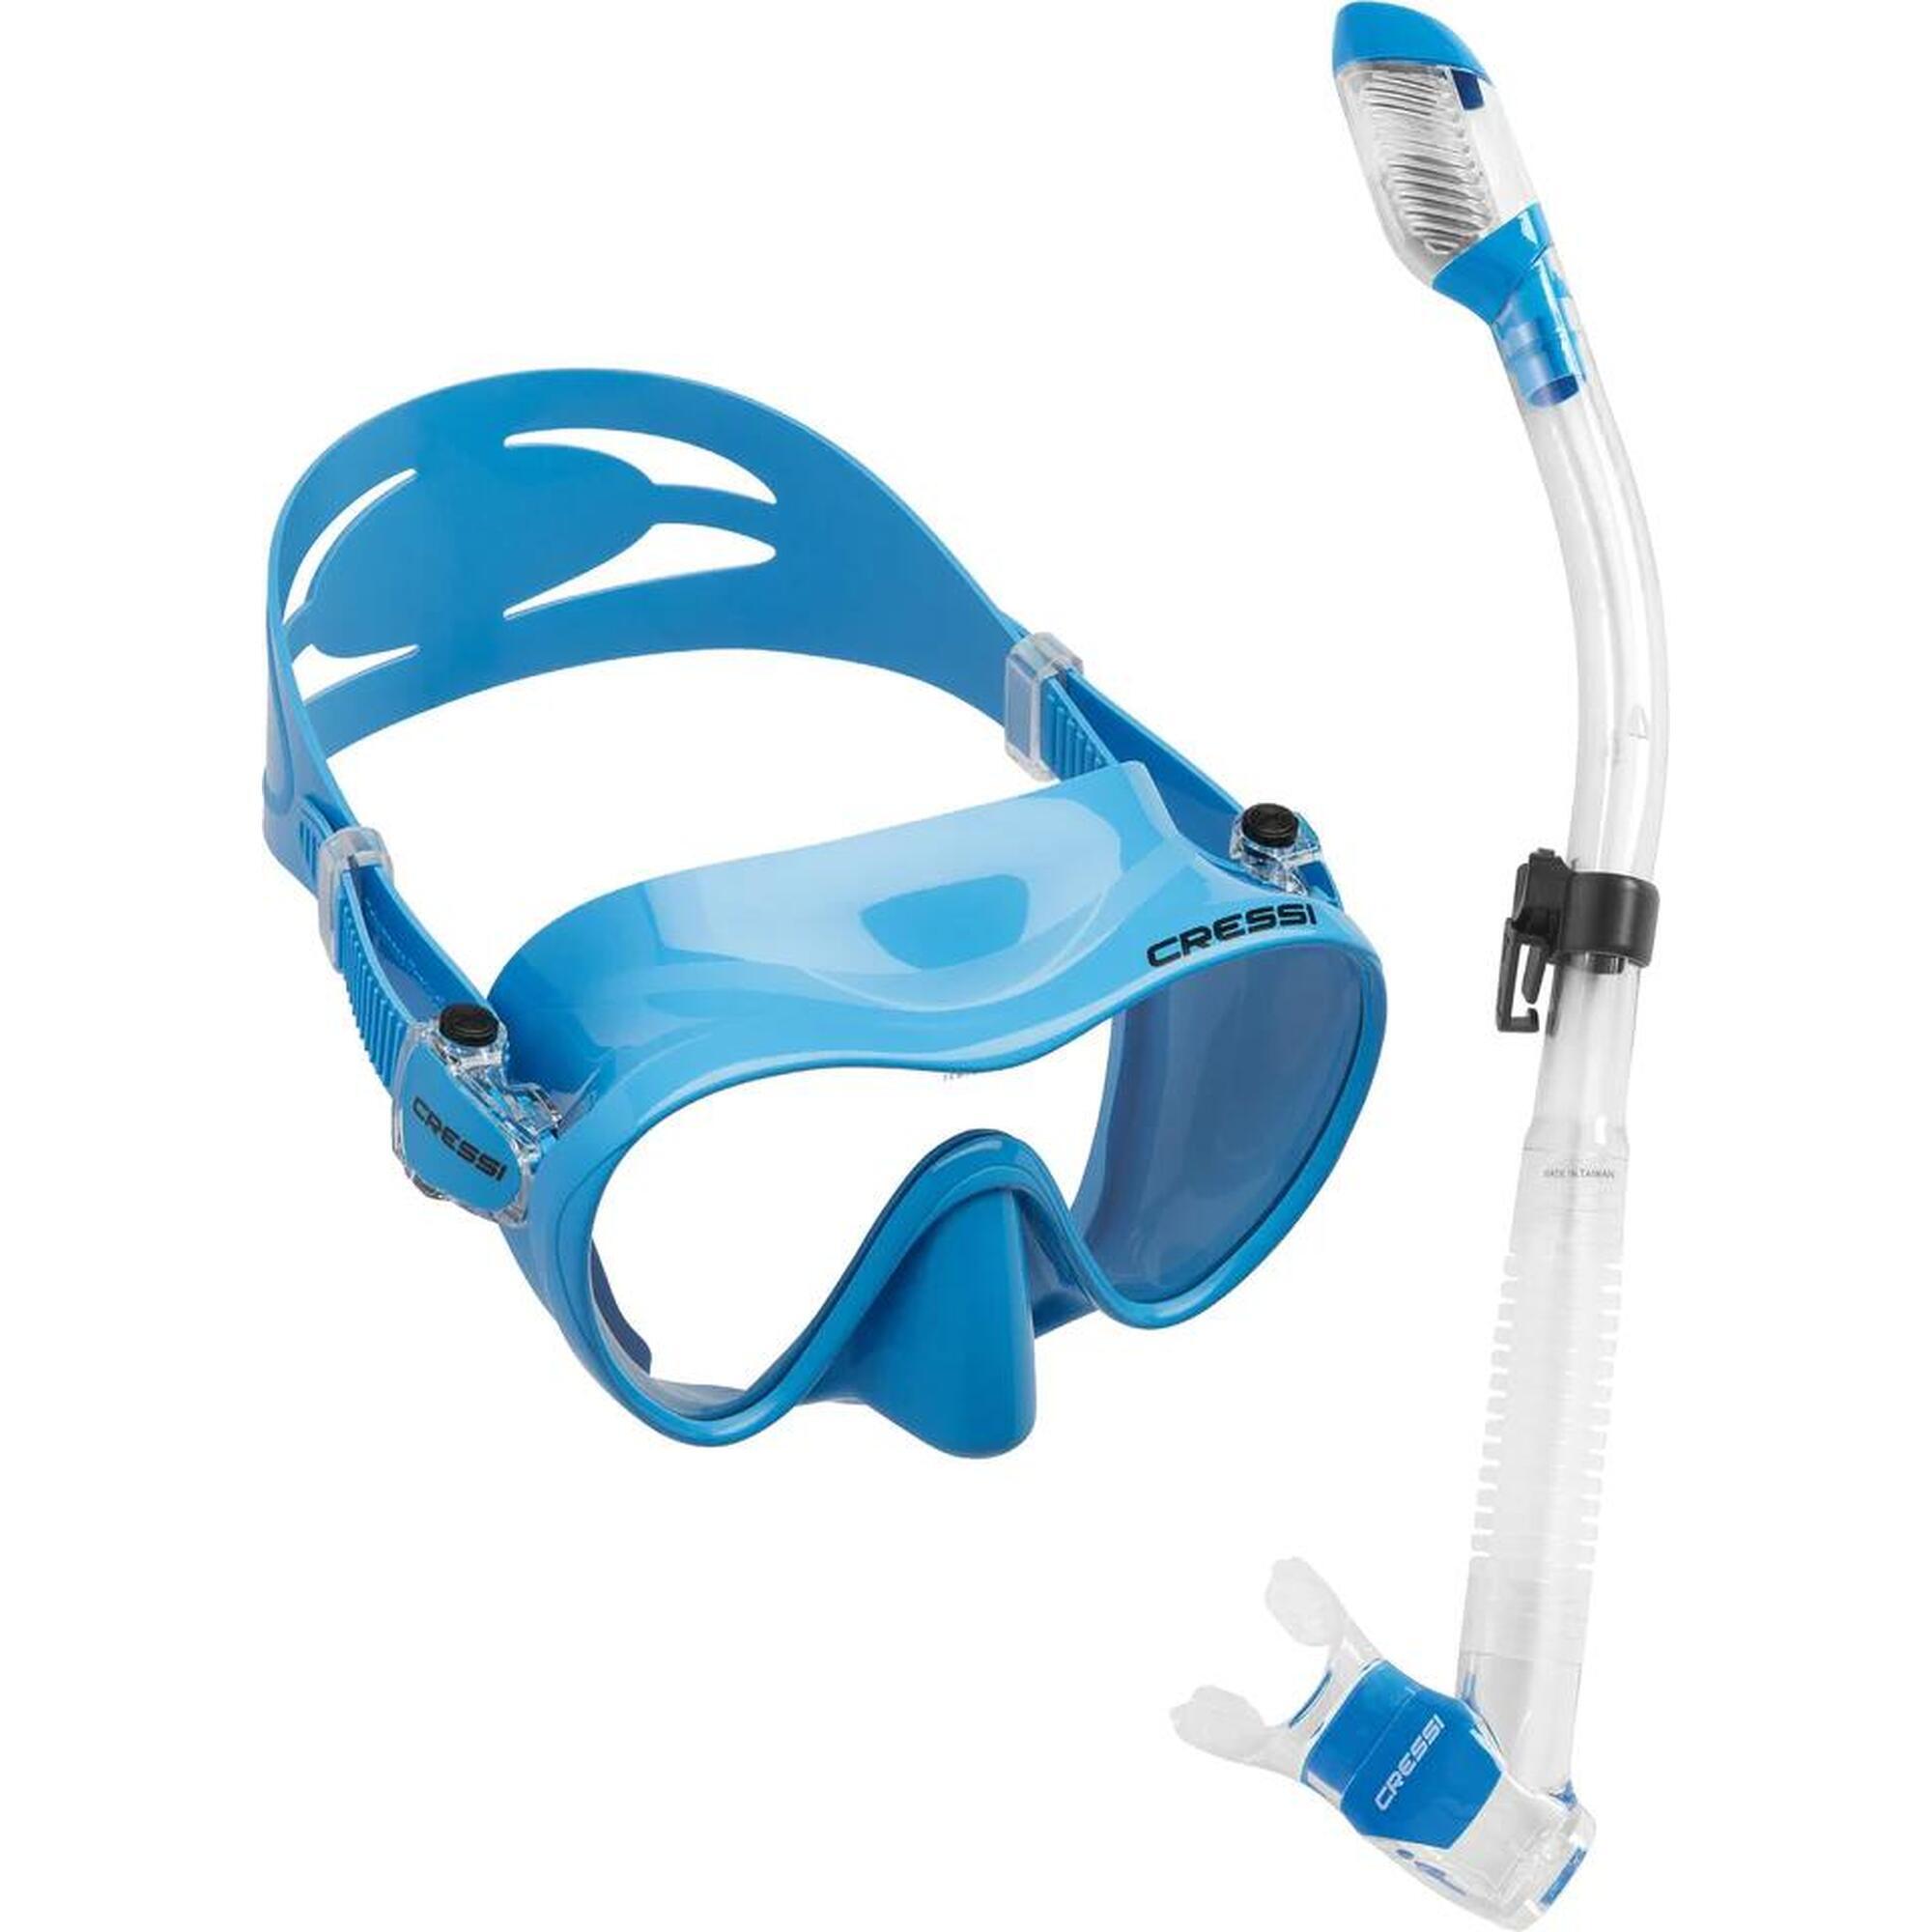 F1 Frameless 面鏡 + Dry 呼吸管組合 - 藍色